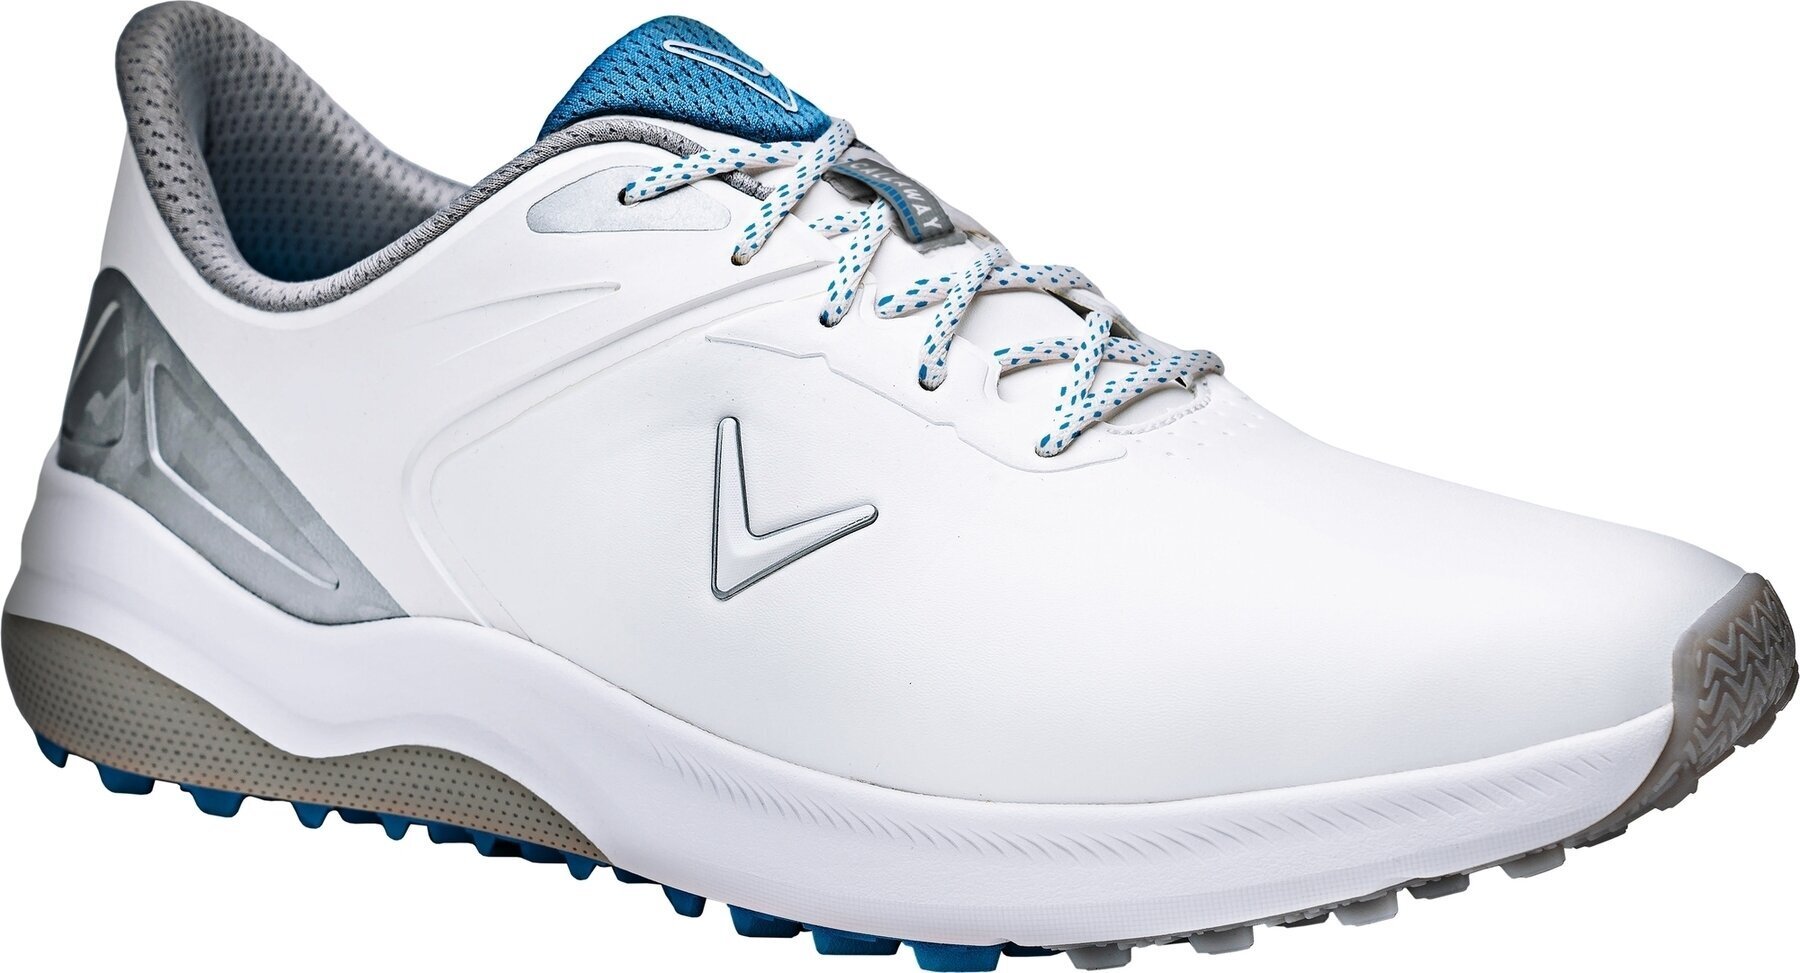 Miesten golfkengät Callaway Lazer Mens Golf Shoes White/Silver 41